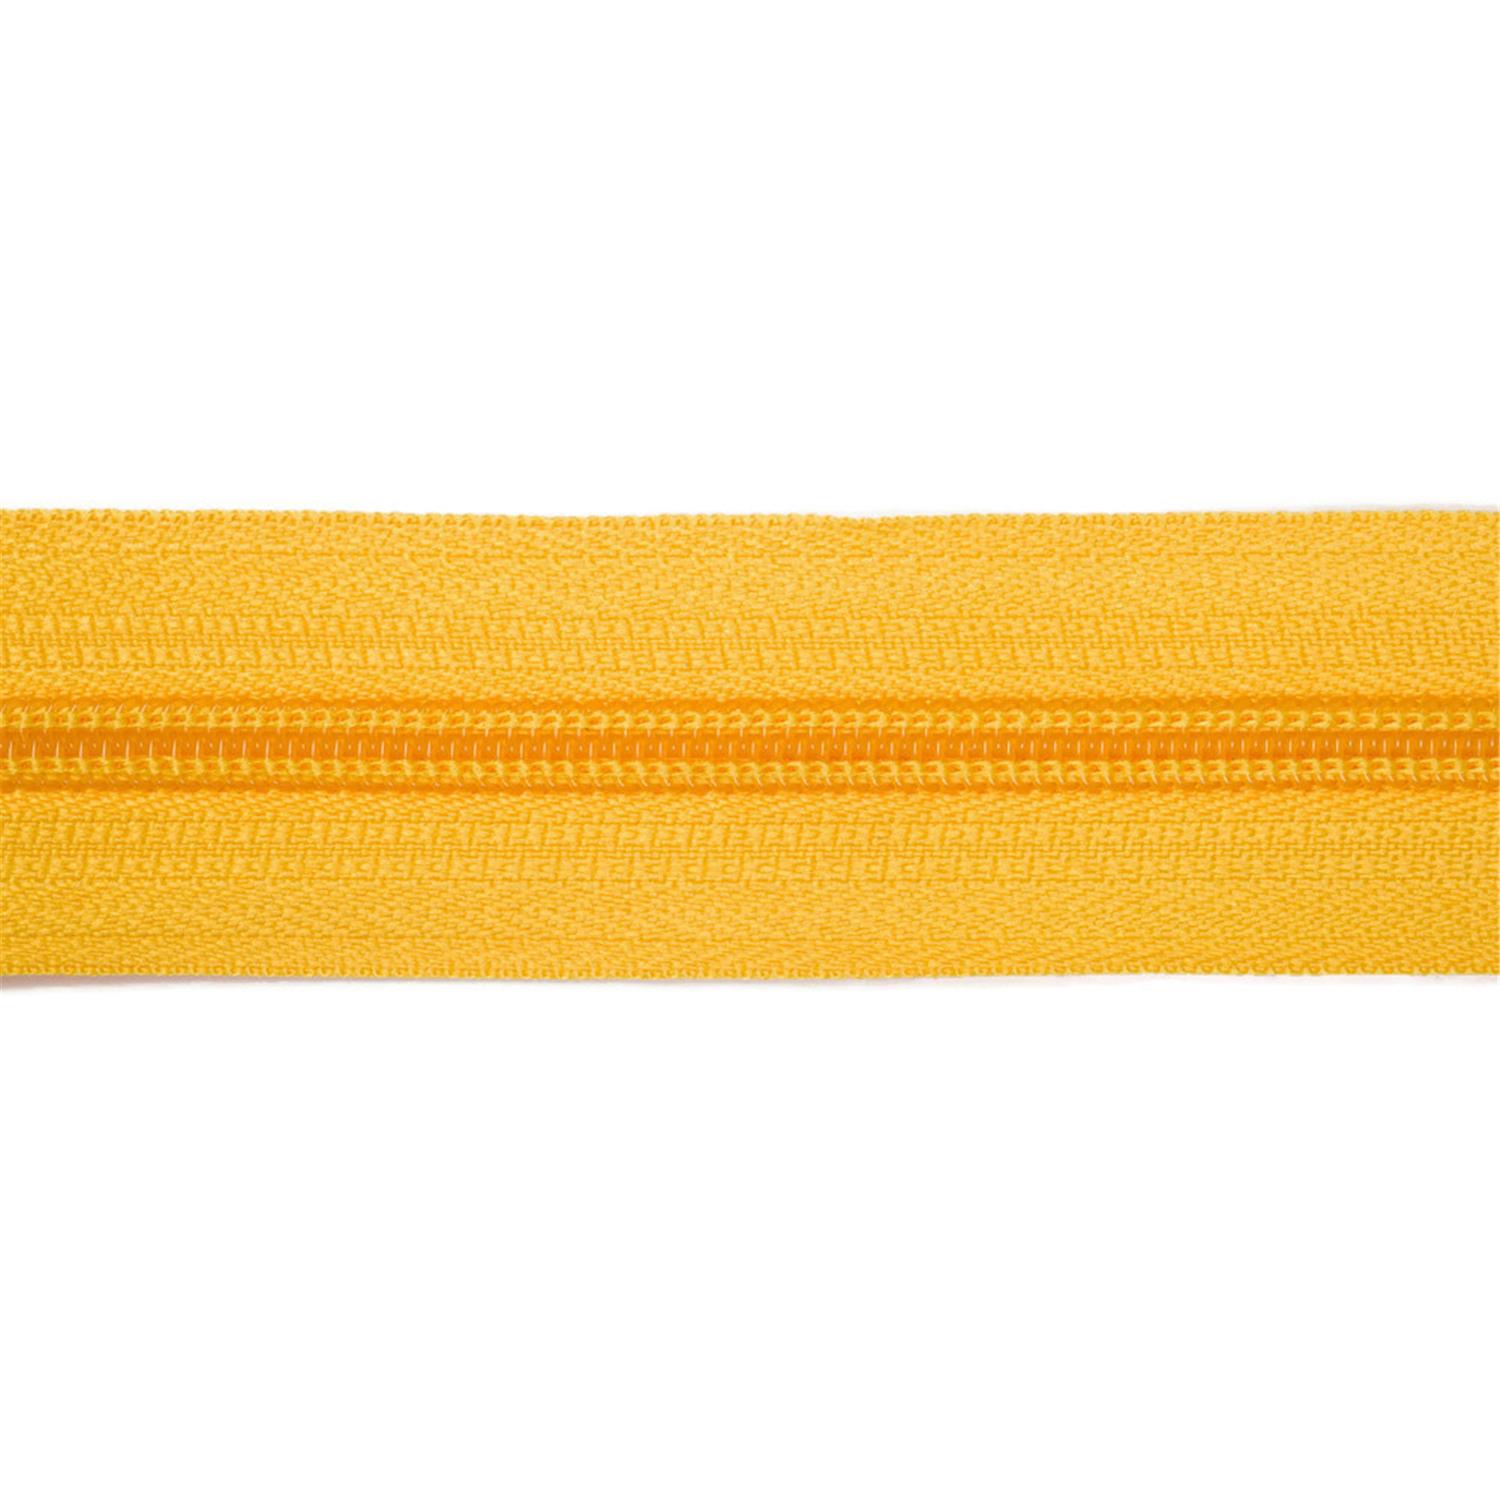 Reißverschluss endlos 5mm gelb #57 5 Meter